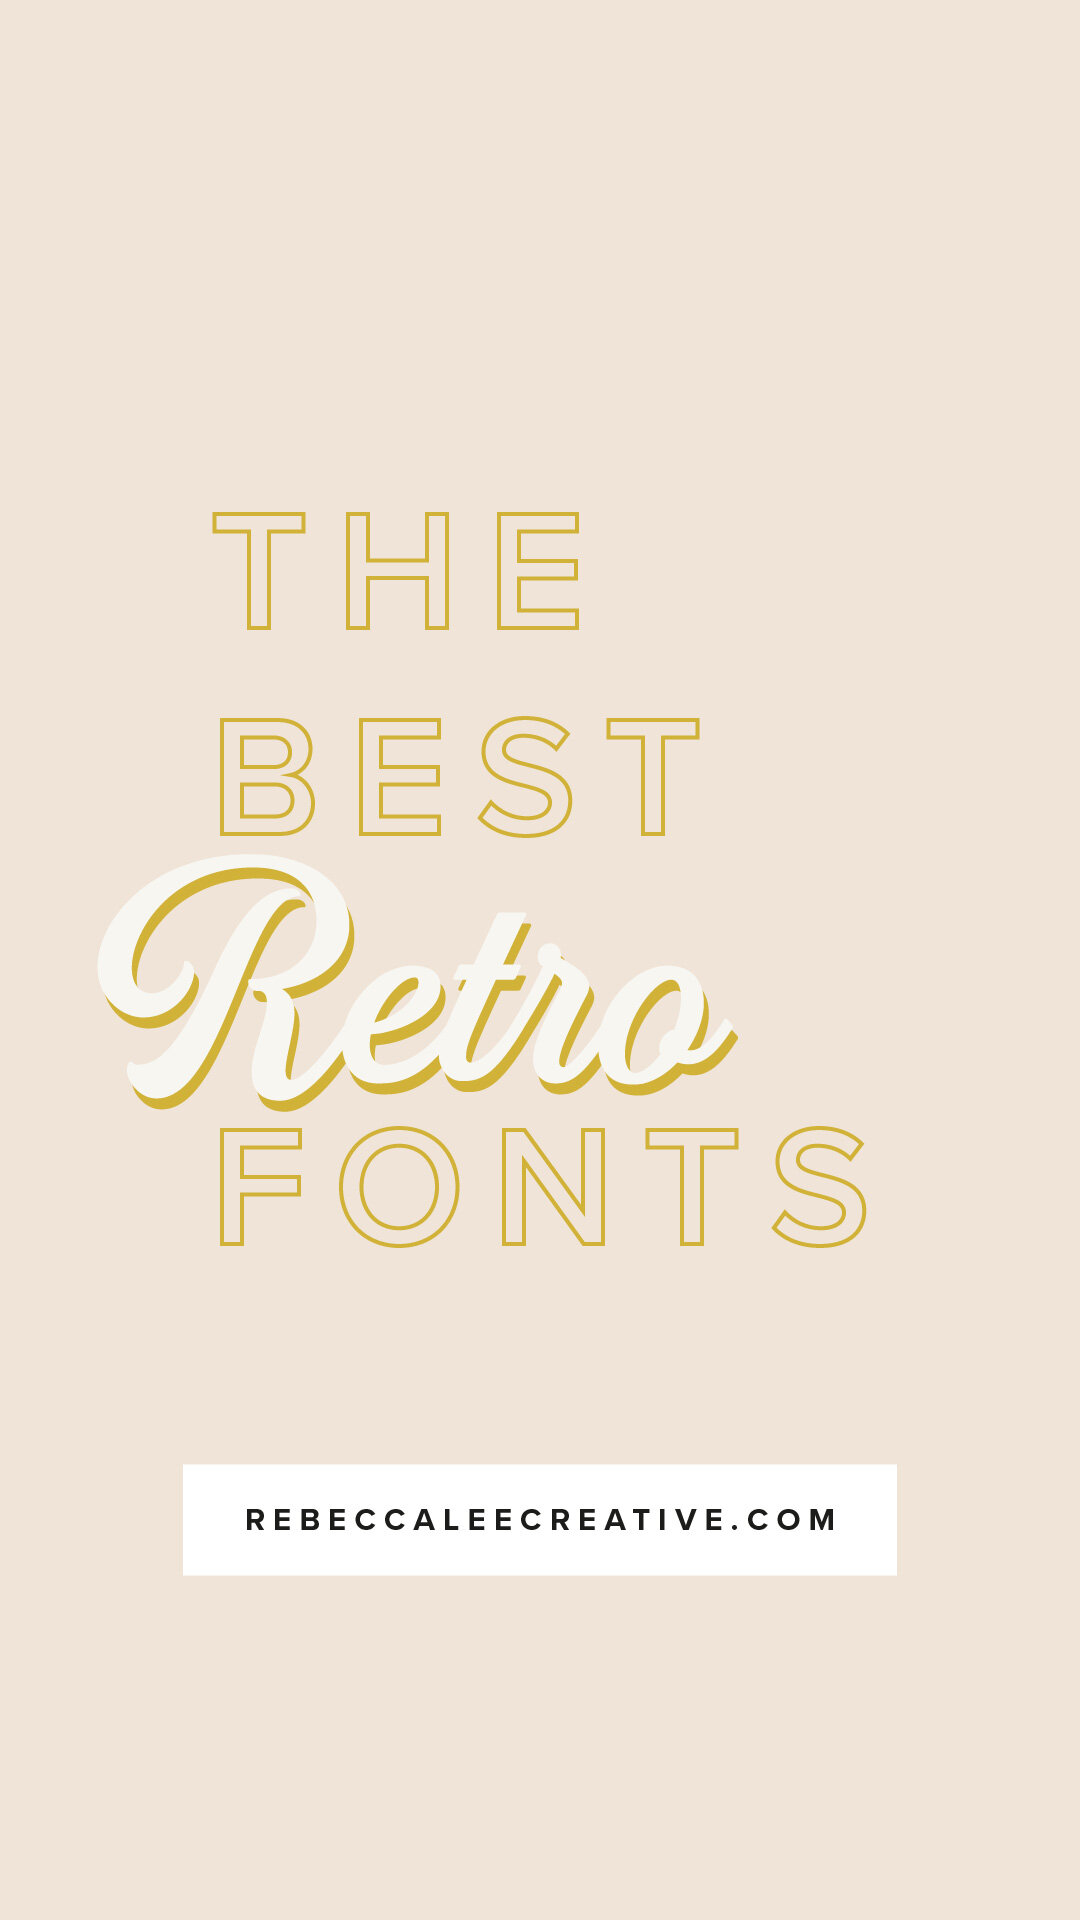 Best-retro-fonts-rebecca-lee-creative-5.jpg